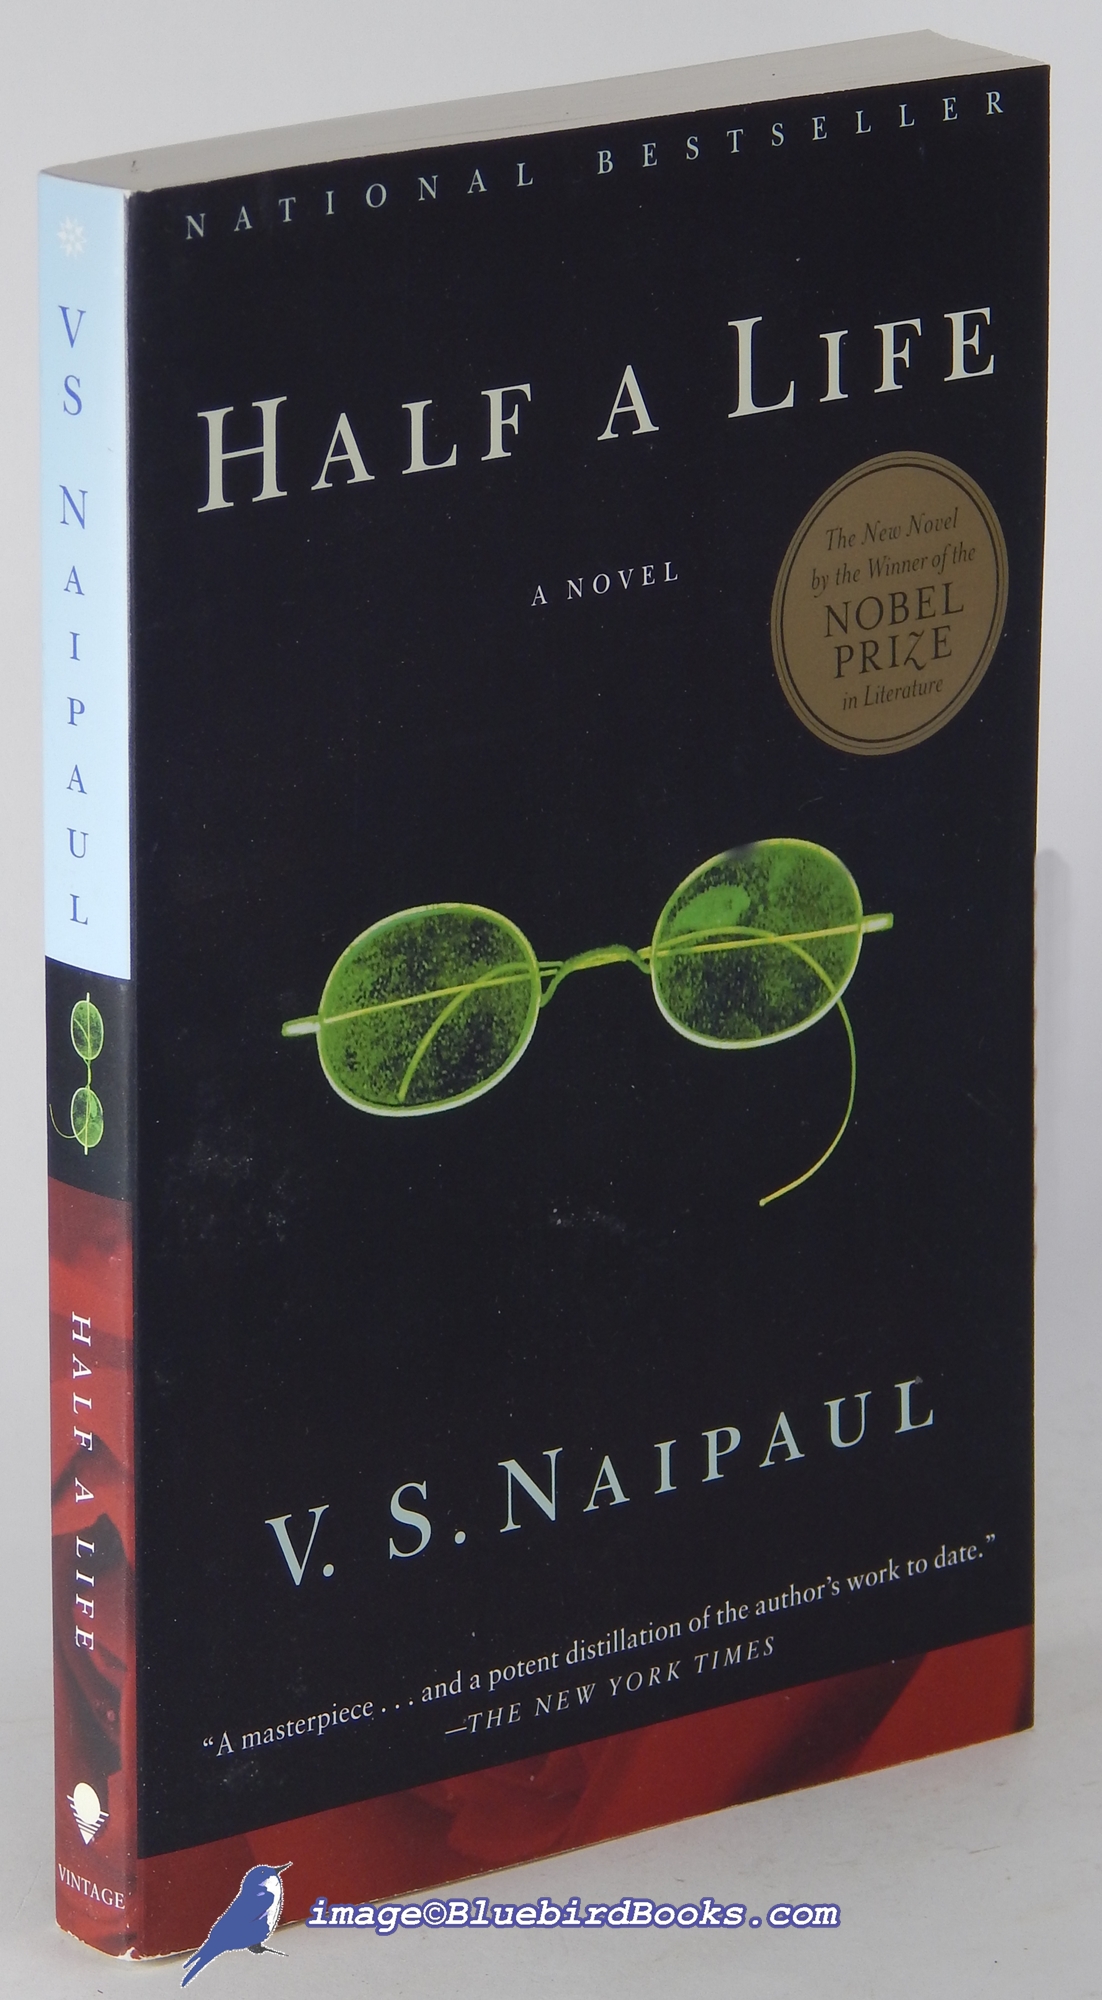 NAIPAUL, V. S. - Half a Life: A Novel